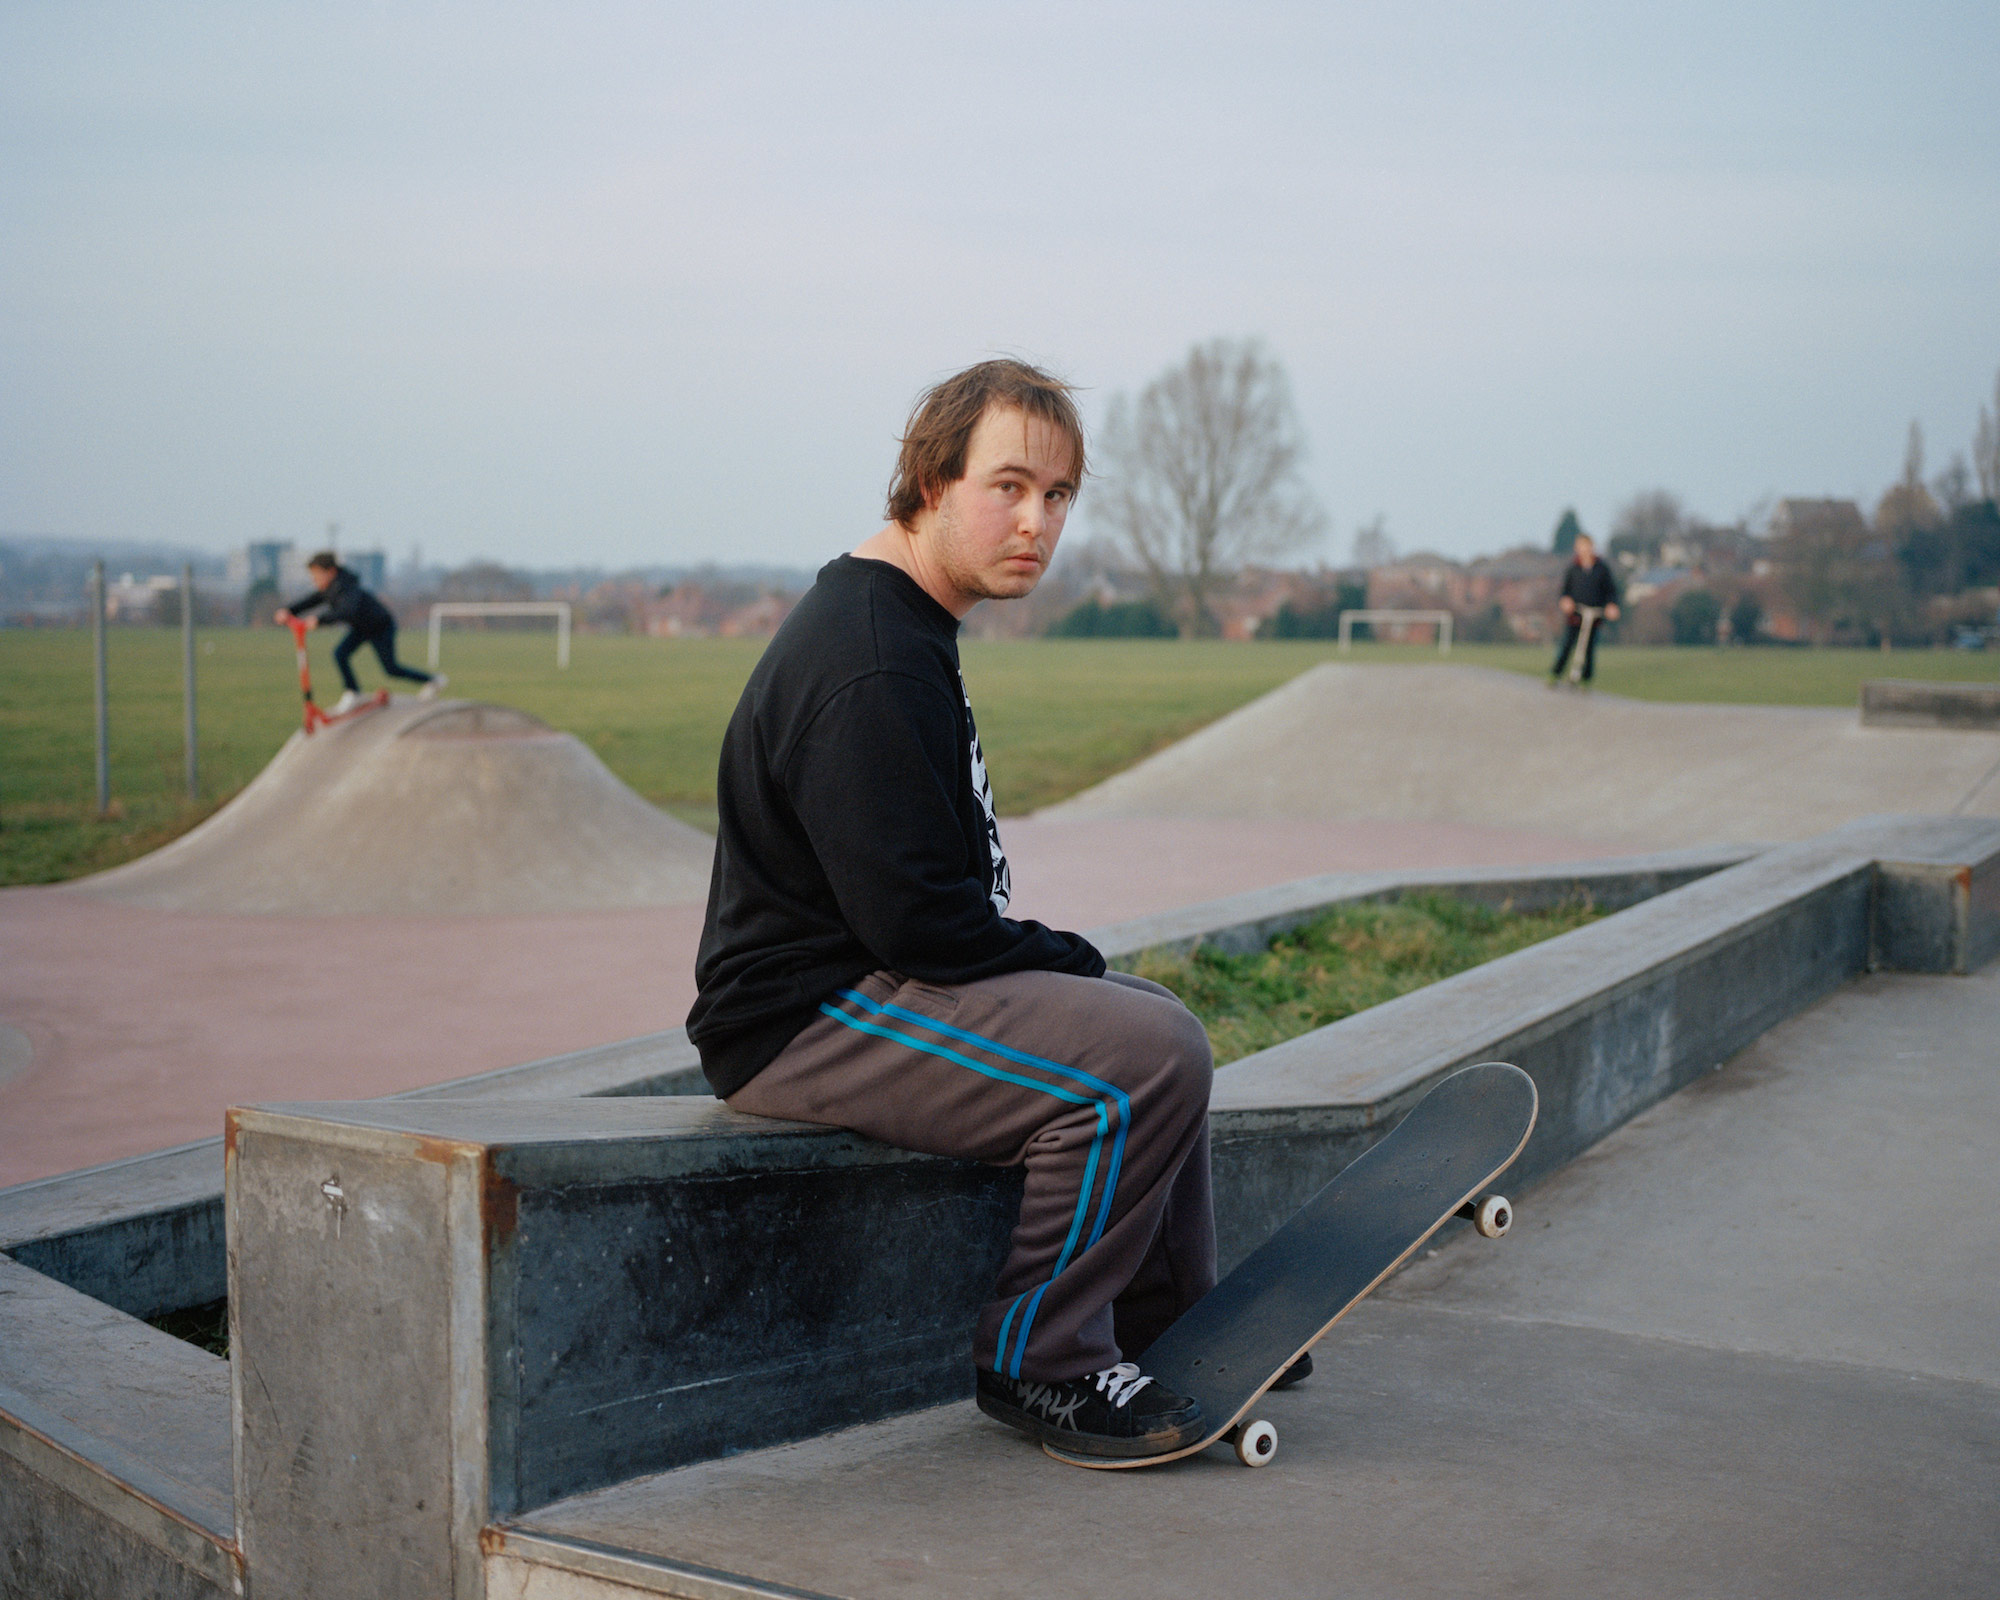 Michael at the skatepark, Mansfield, Nottinghamshire.